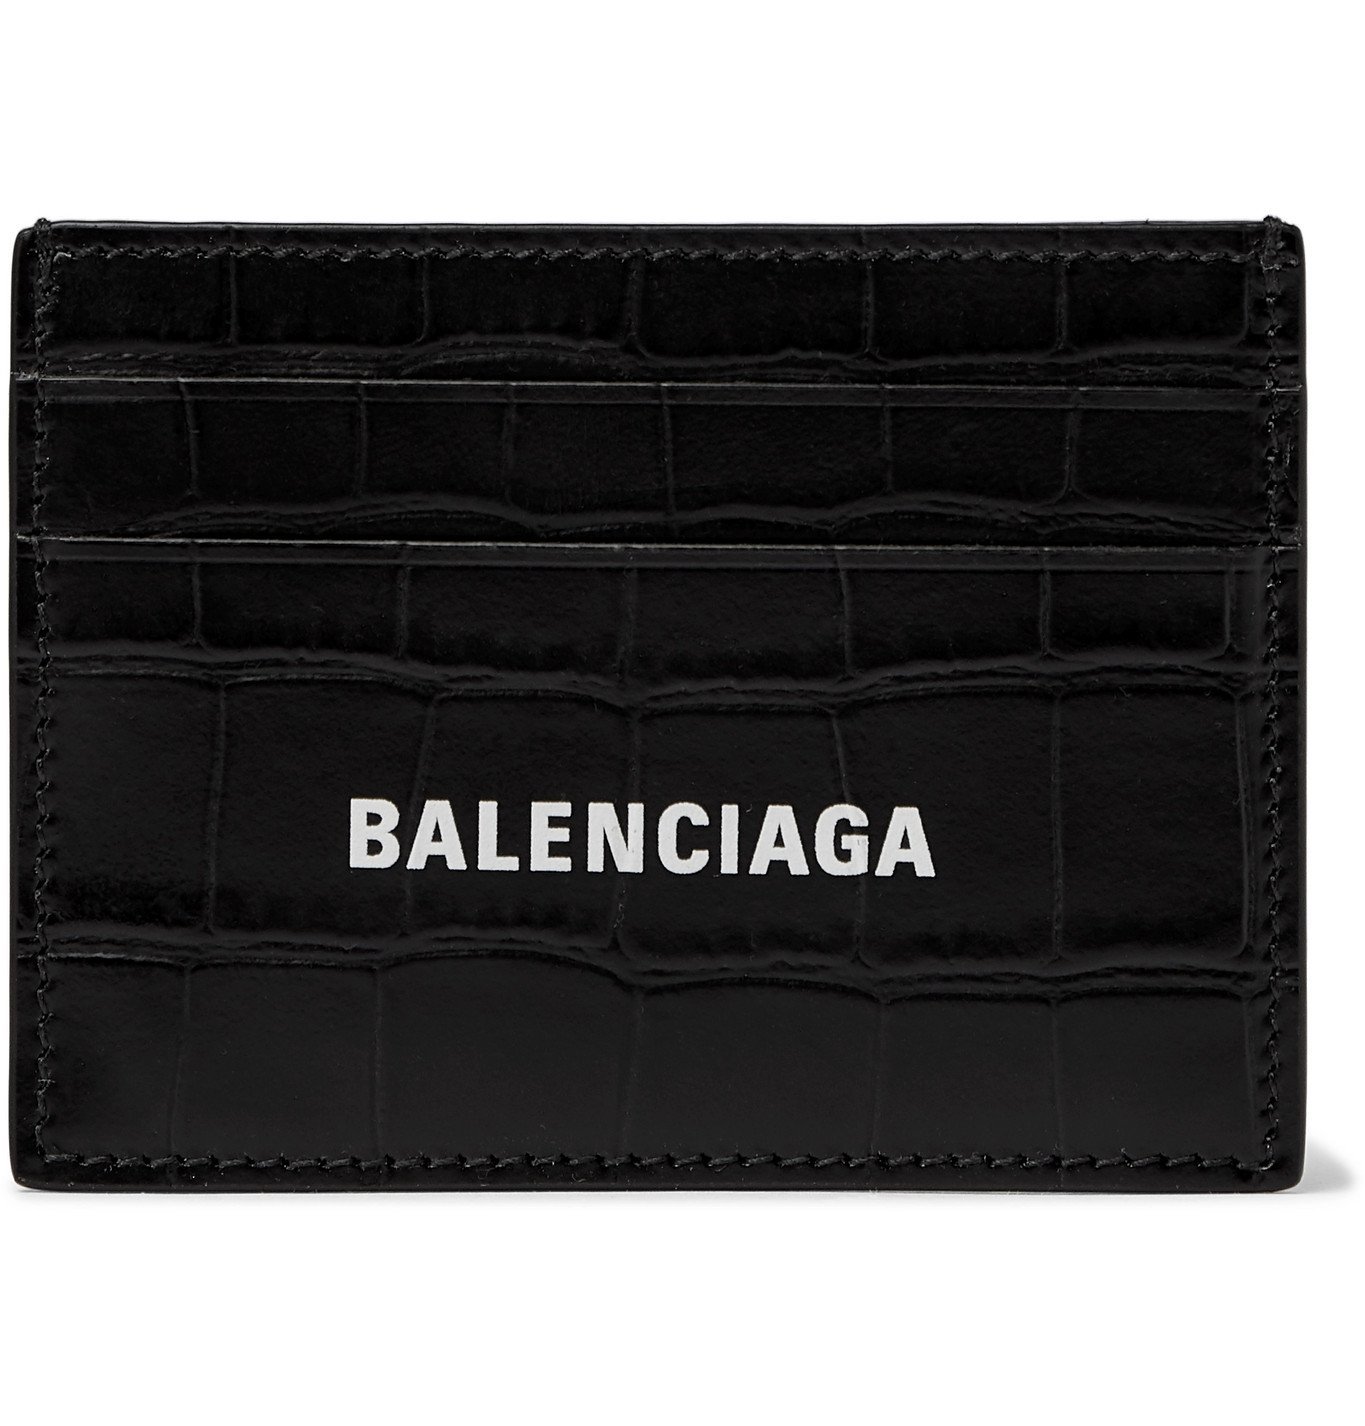 BALENCIAGA - Logo-Print Croc-Effect Leather Cardholder - Black Balenciaga